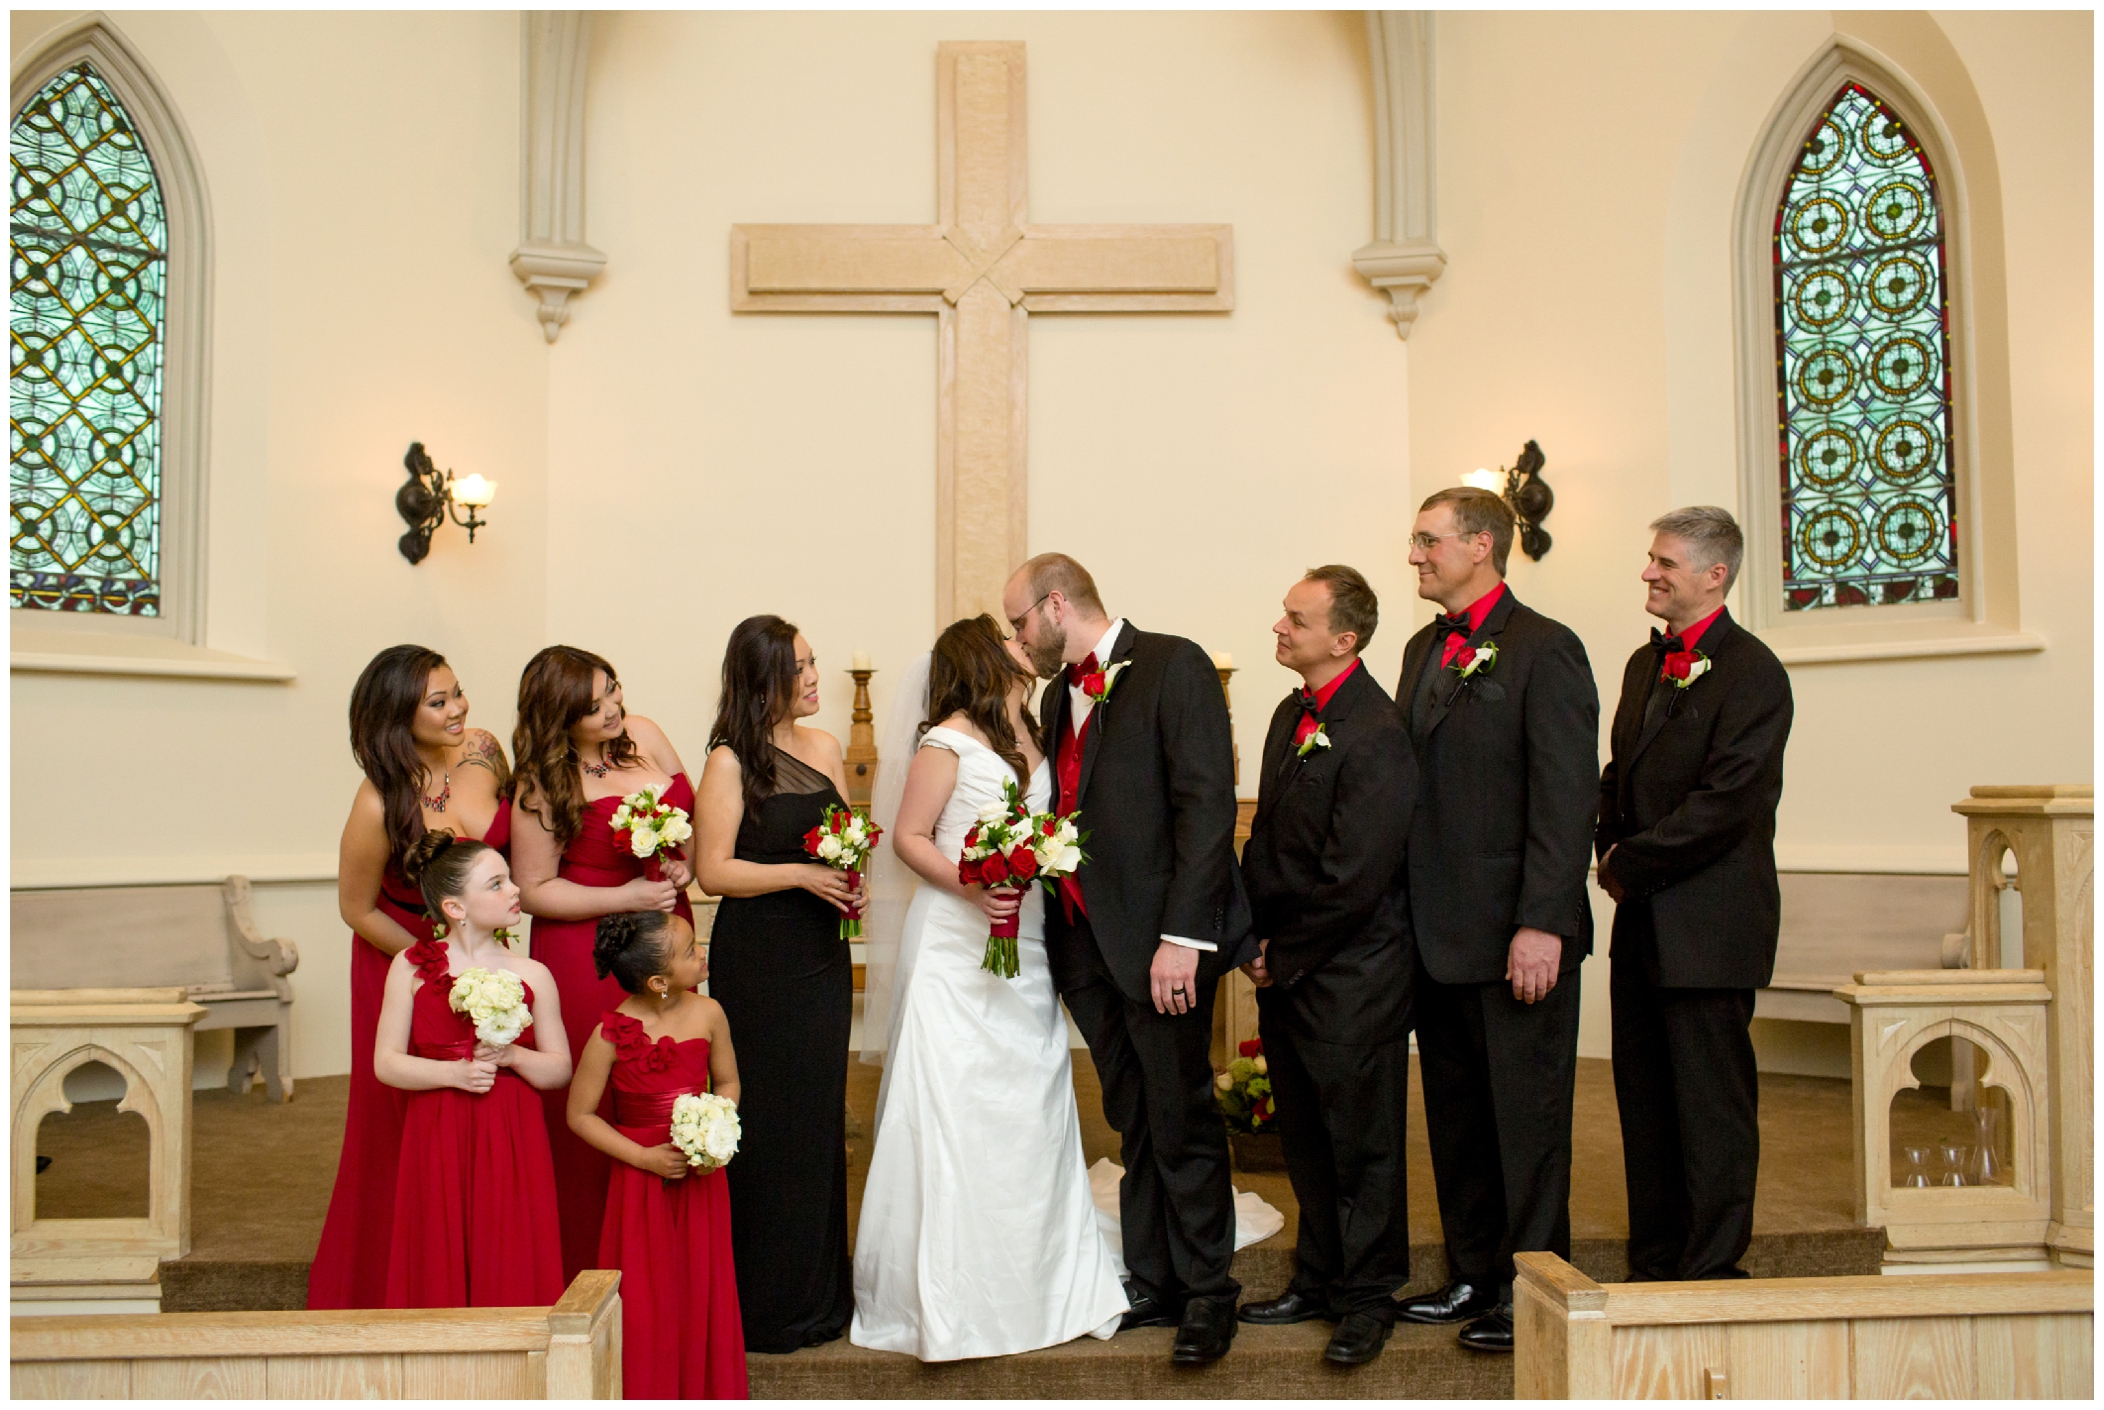 Evans Memorial Chapel wedding party photos